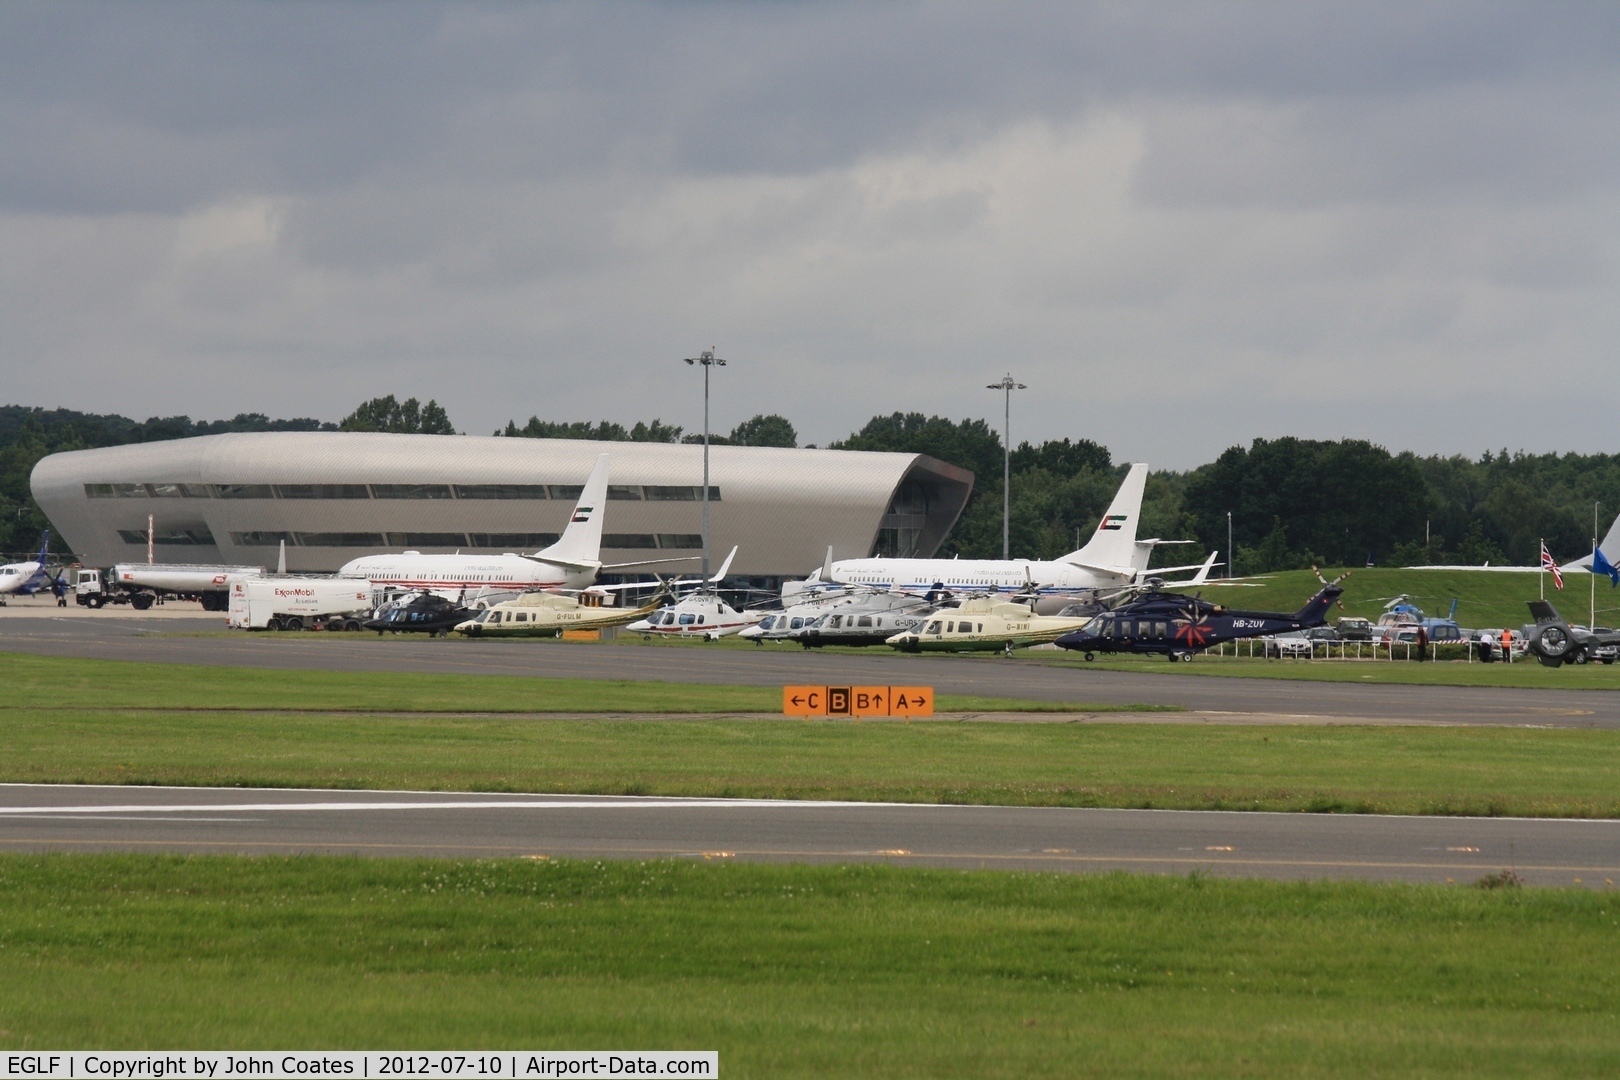 Farnborough Airfield Airport, Farnborough, England United Kingdom (EGLF) - Line up including HB-ZUV